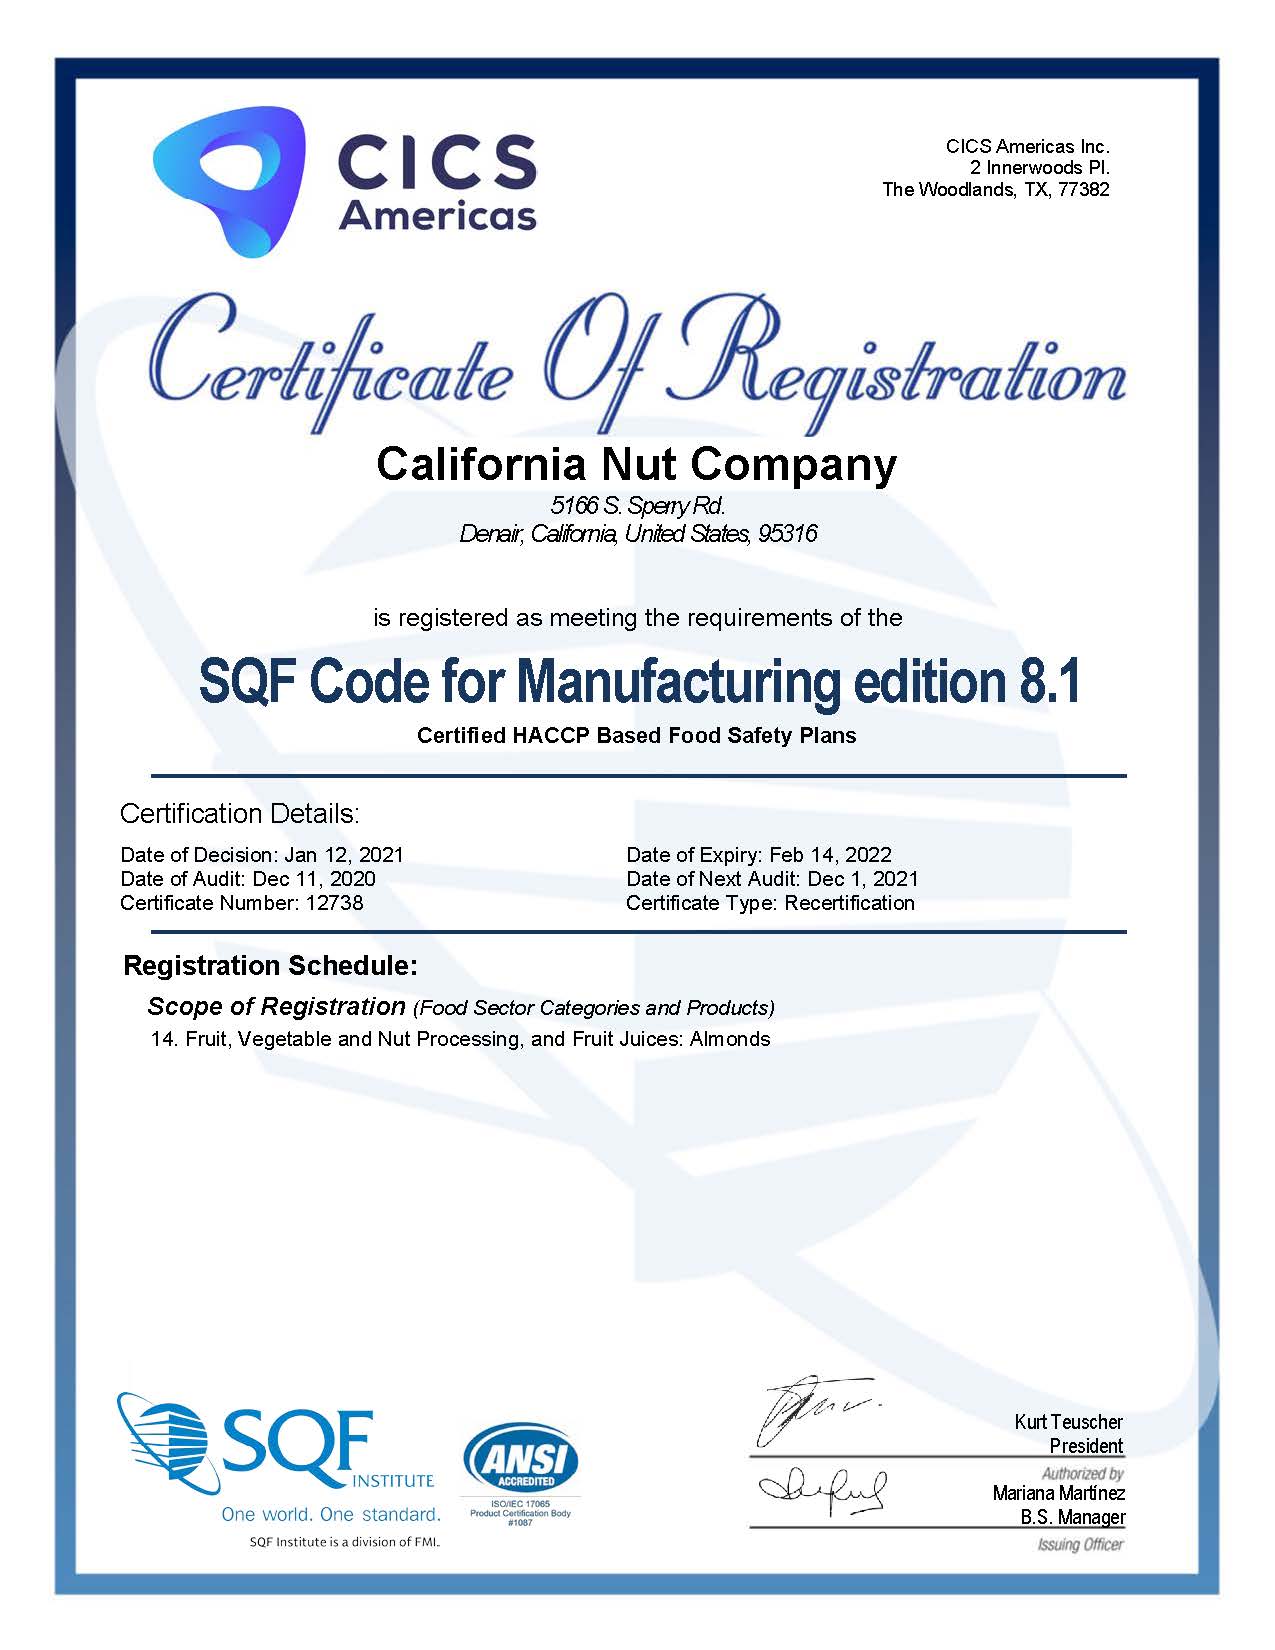 California Nut Co. CICS Certificate of Registration